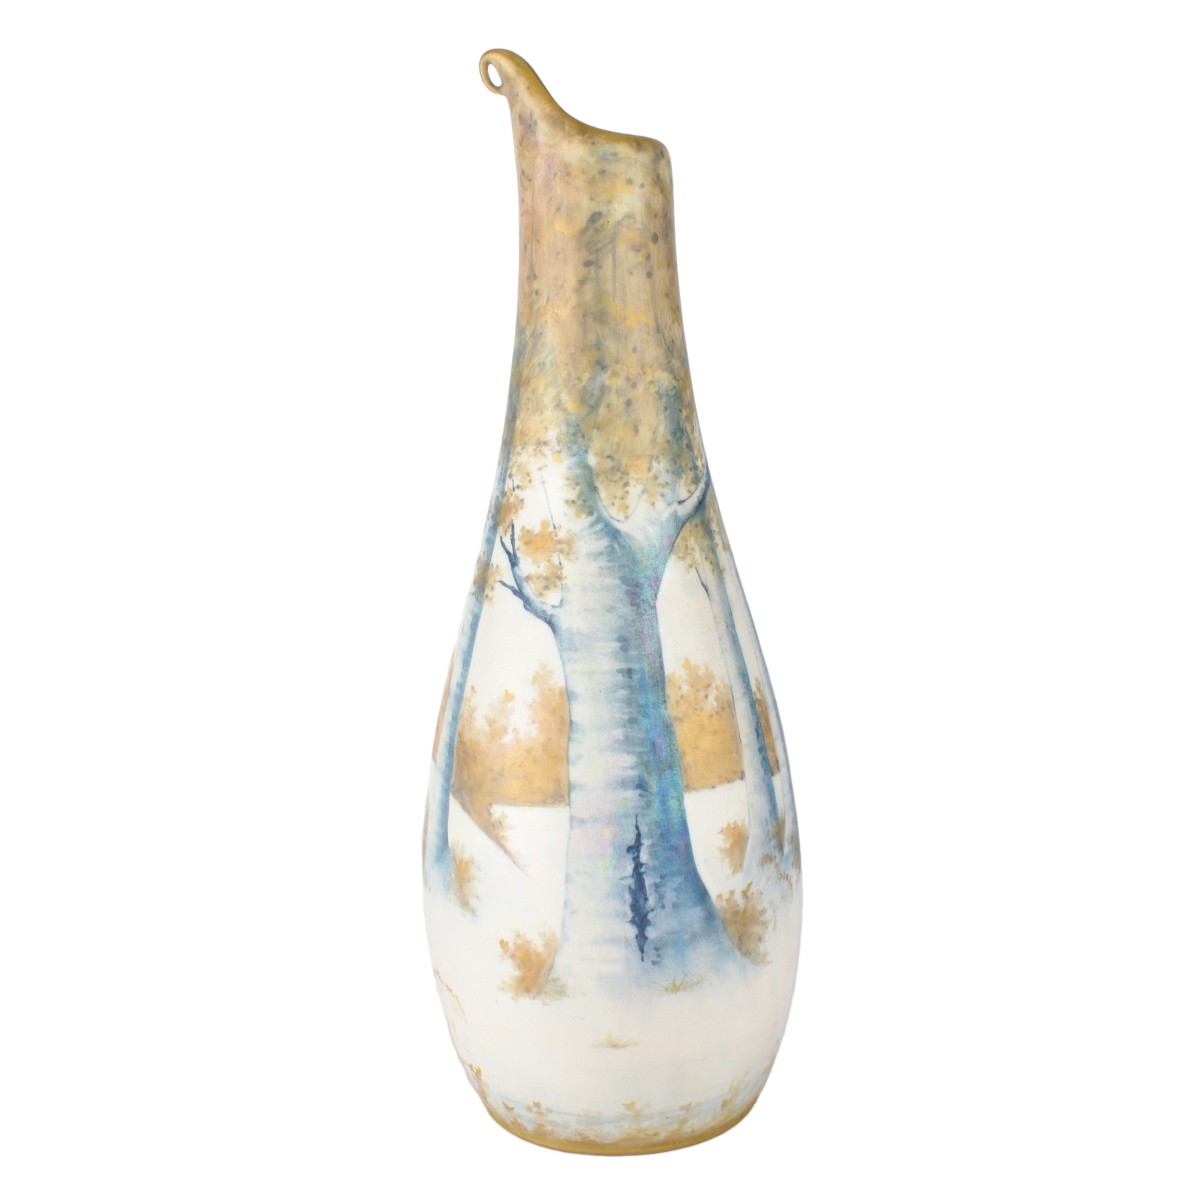 Paul Dachsel  Turn Teplitz Porcelain Vase